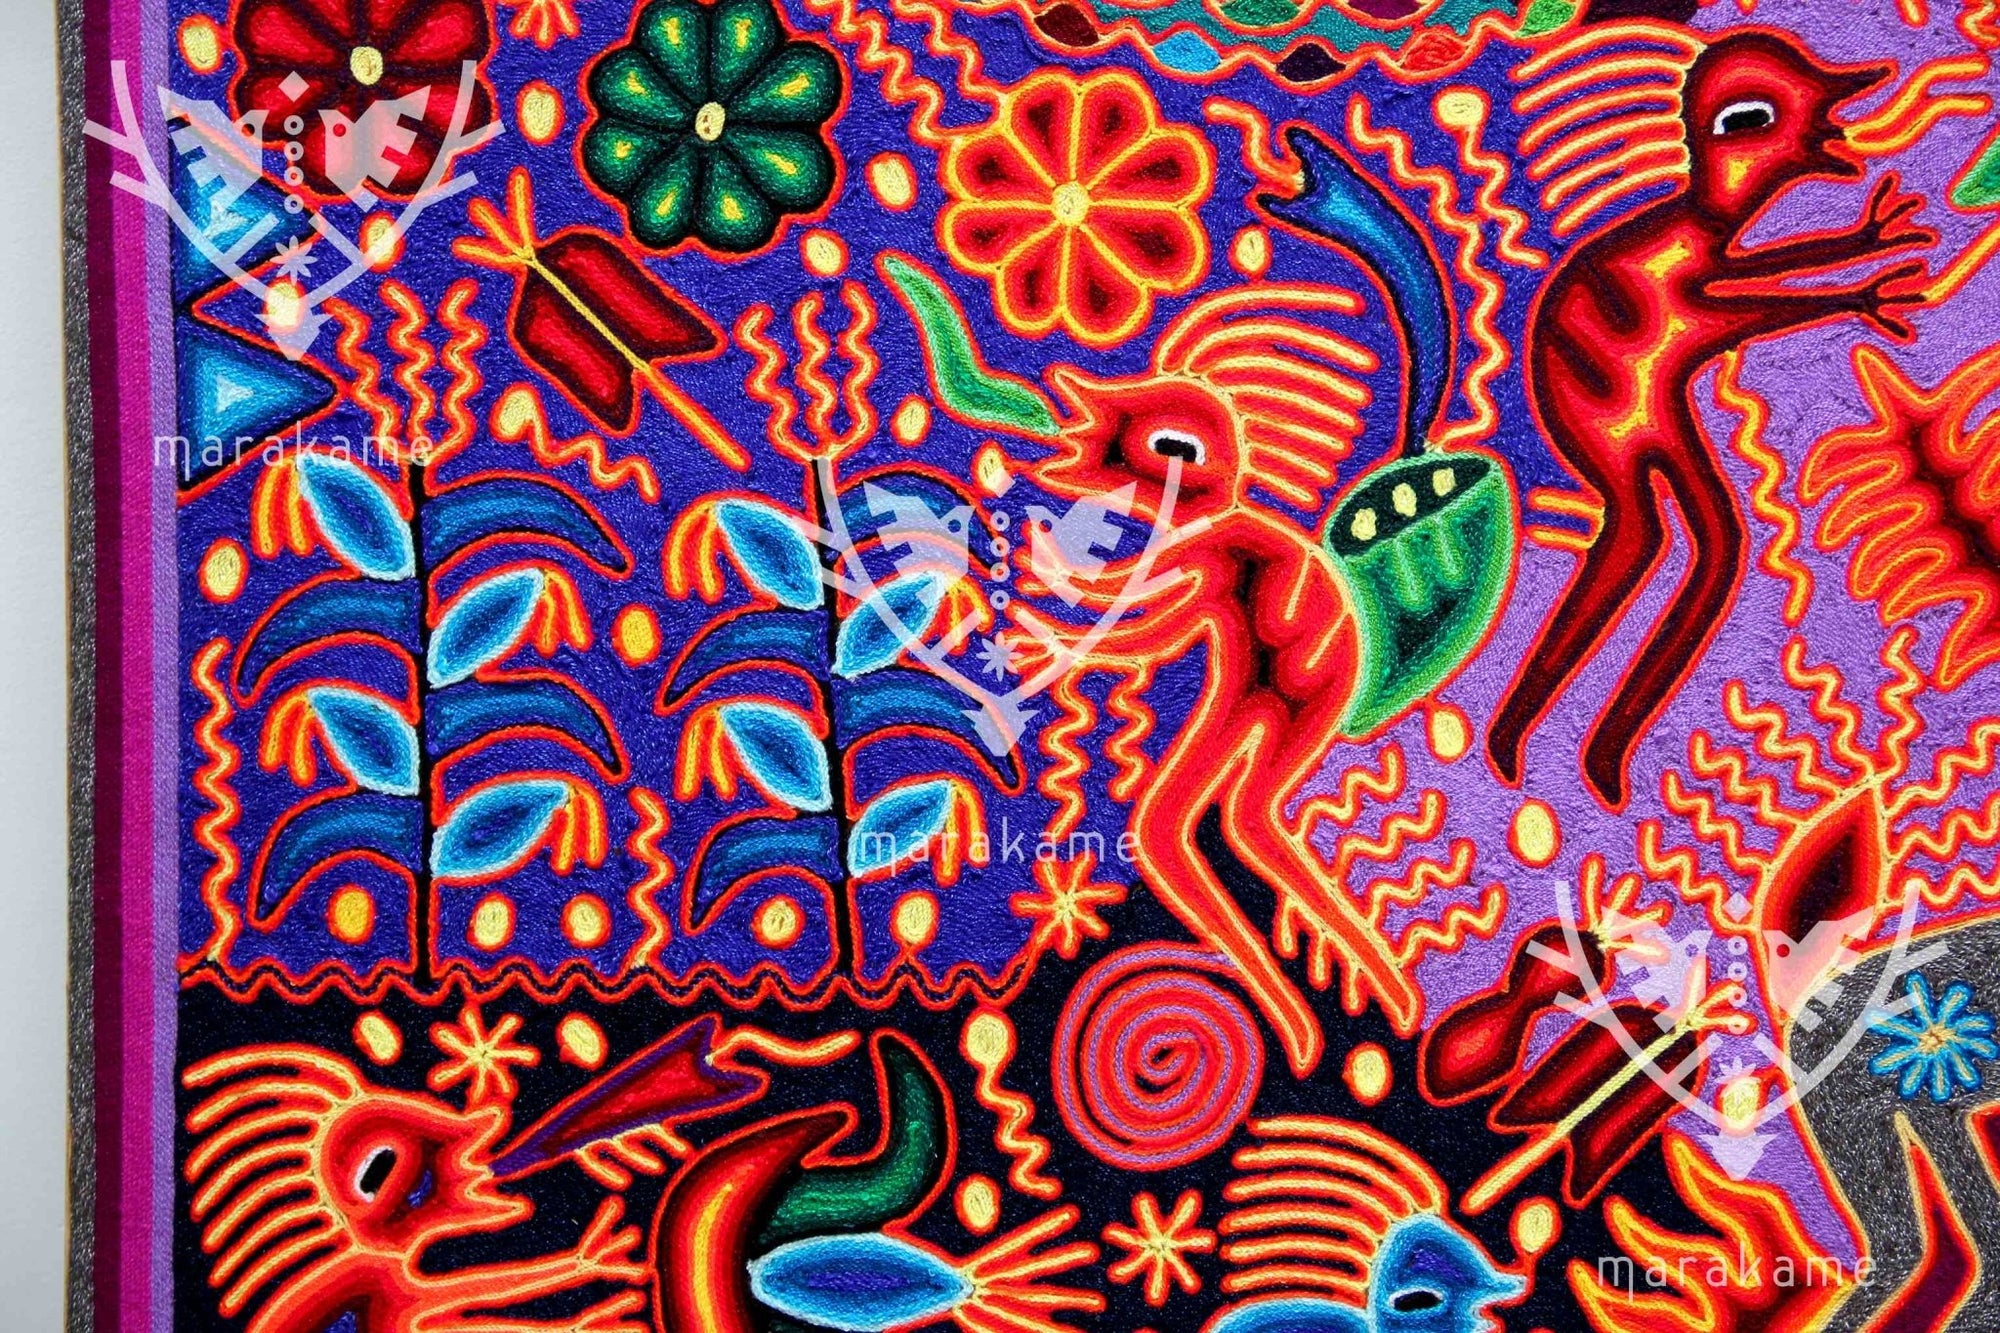 Yarn Nierika Huichol Painting - Maxa kuaxi - 120 x 120 cm. - Huichol Art - Marakame